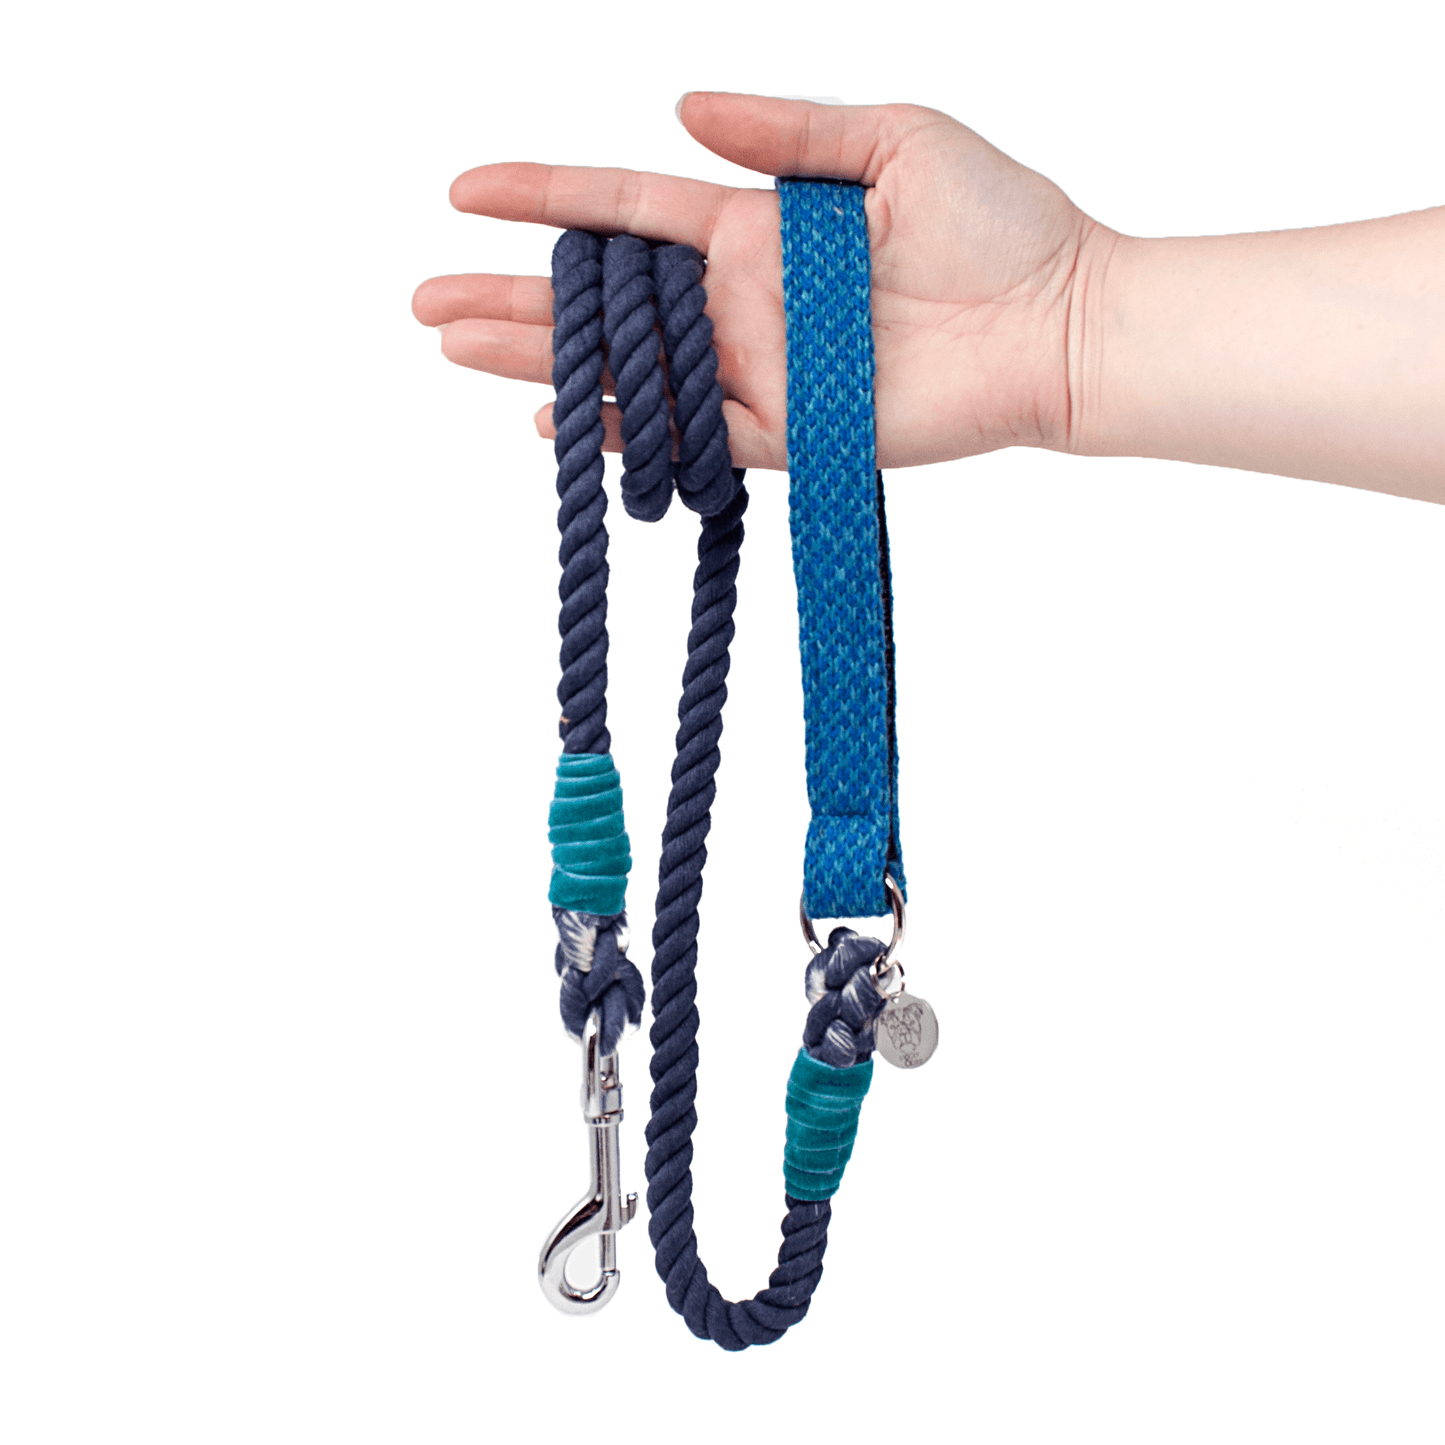 Royal Blue & Turquoise - Harris Design - Handmade Dog Collar